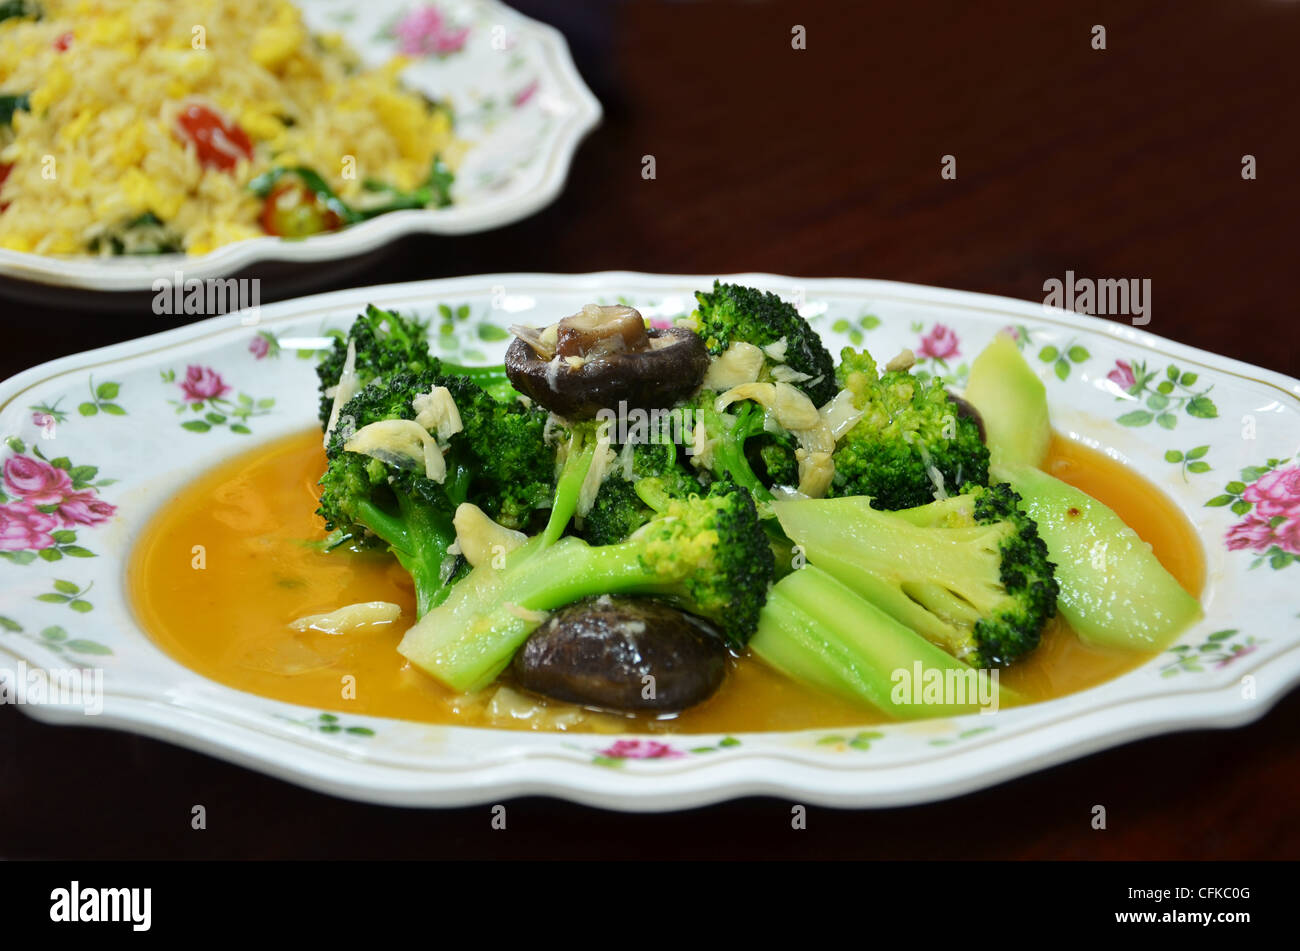 stir fry broccoli with shiitake mushroom Stock Photo